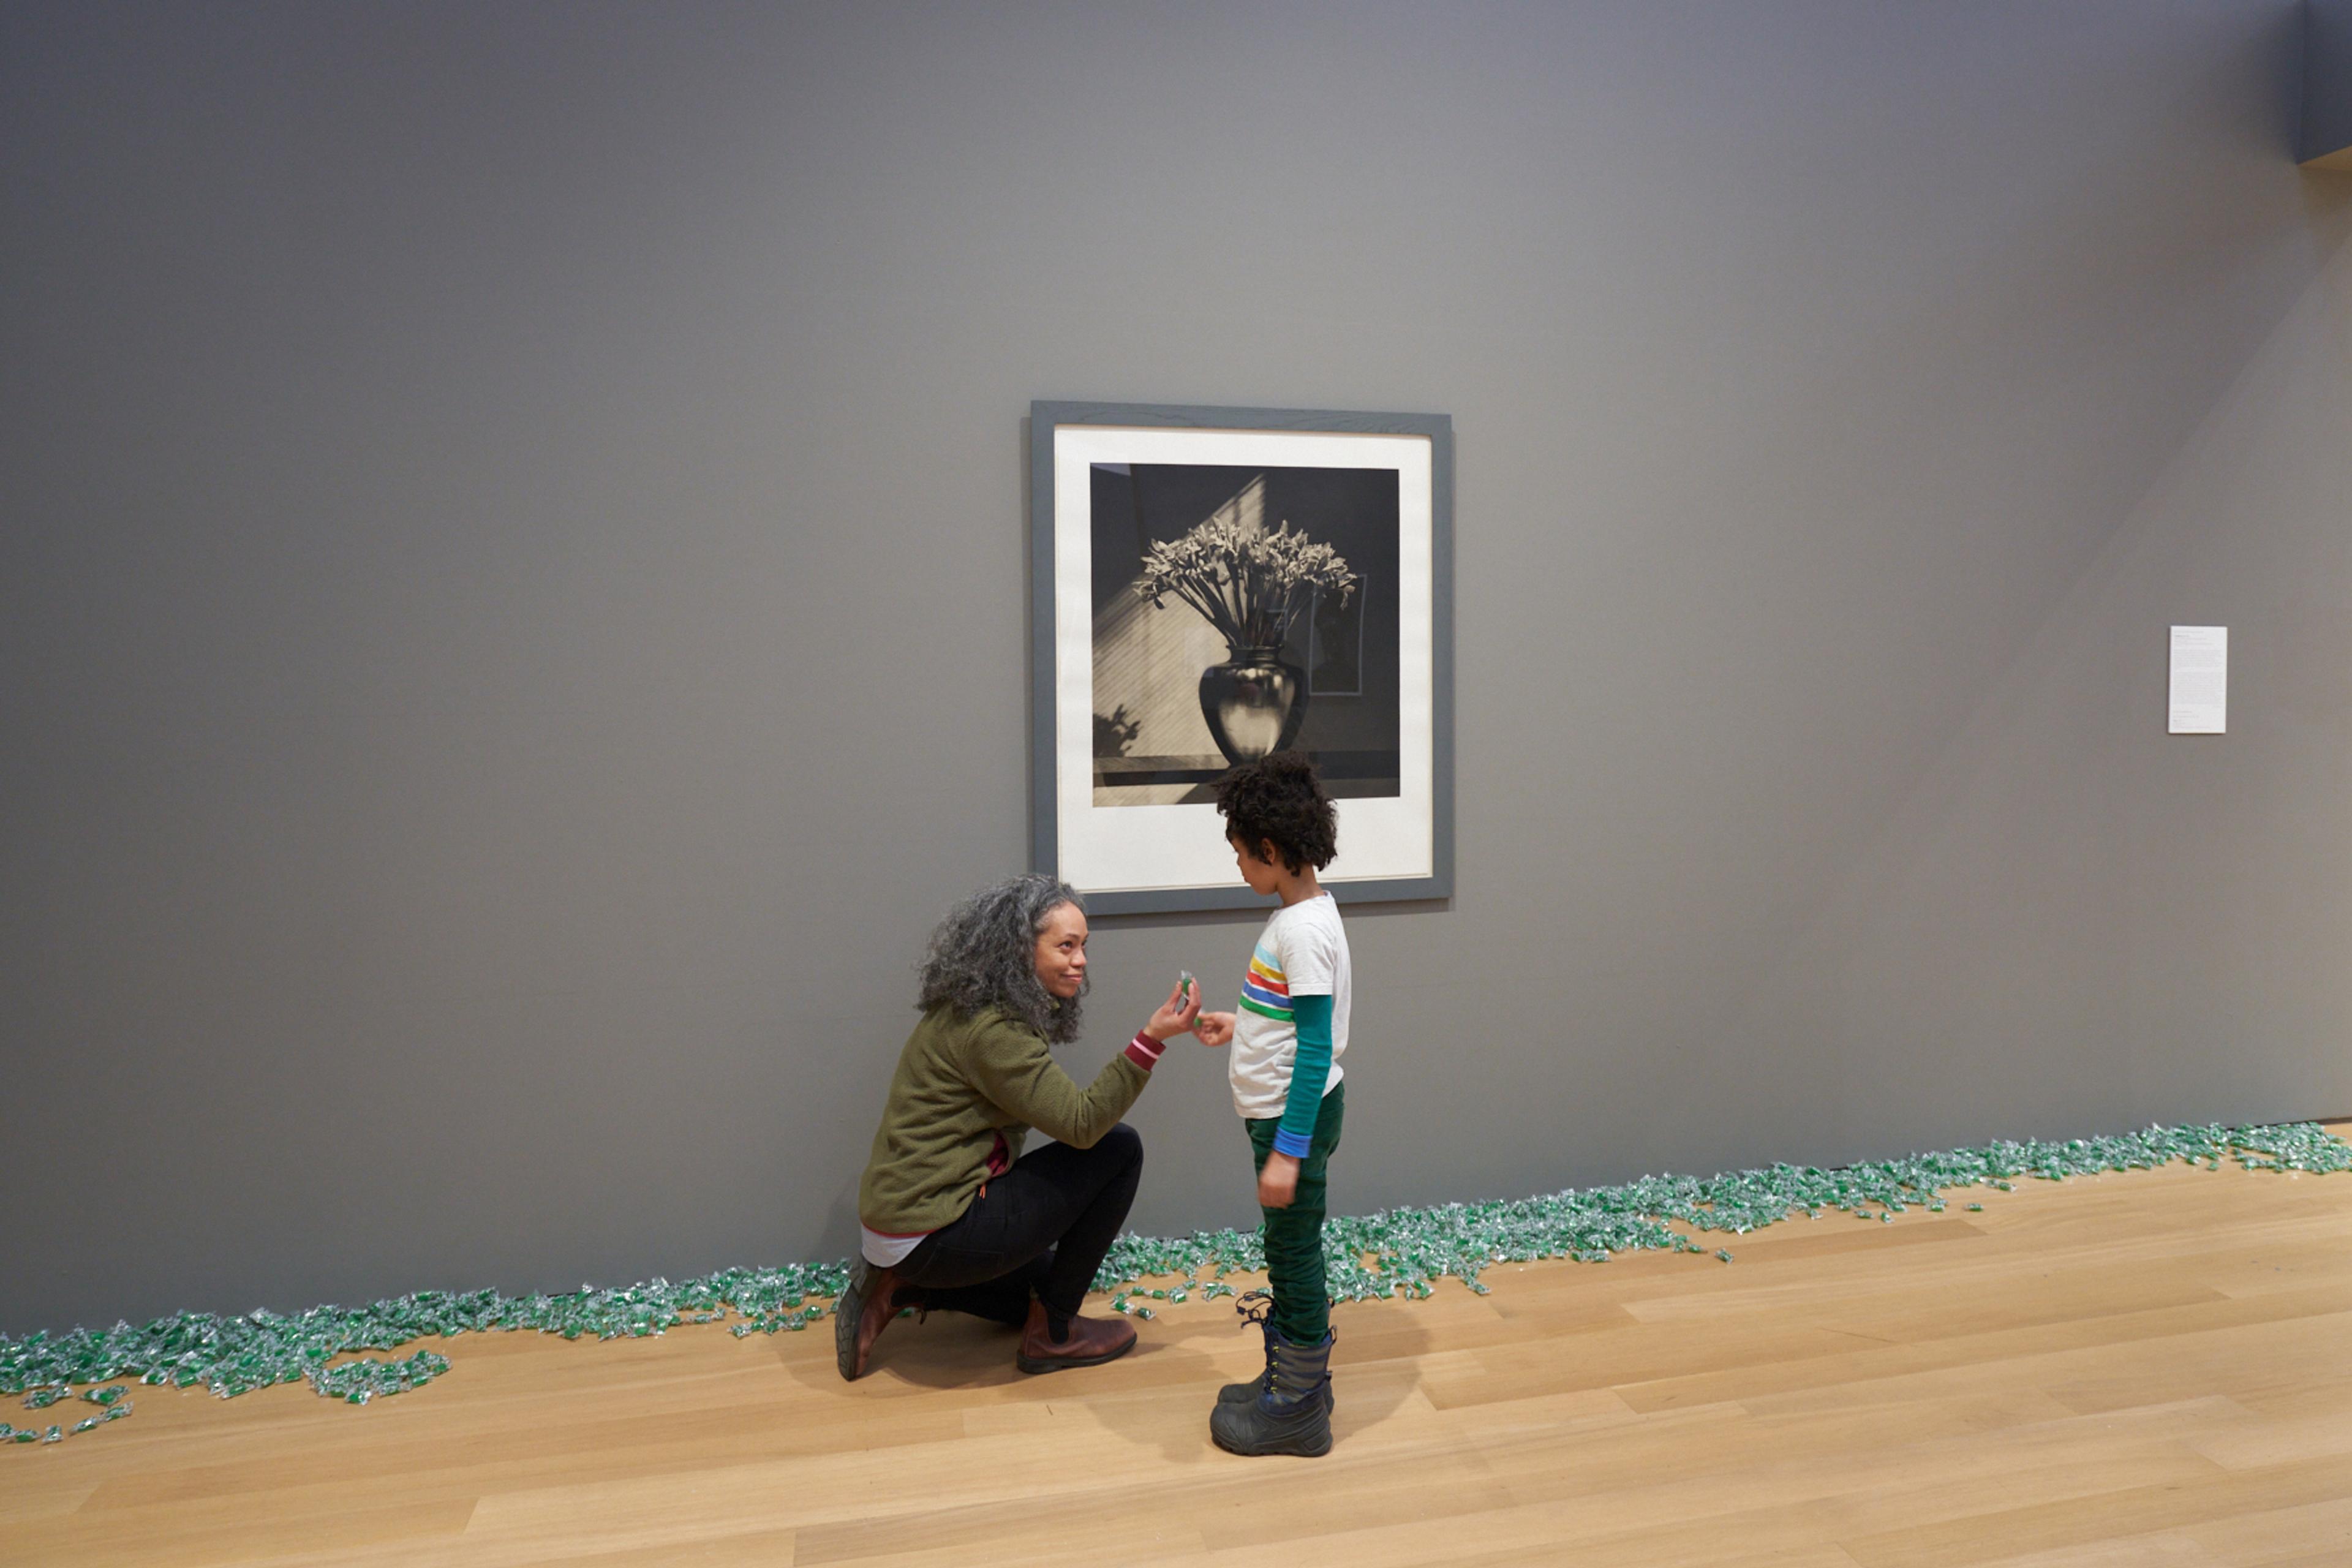 Felix Gonzalez-Torres  "Untitled" (L.A.) installation Kenyon College Gambier Ohio